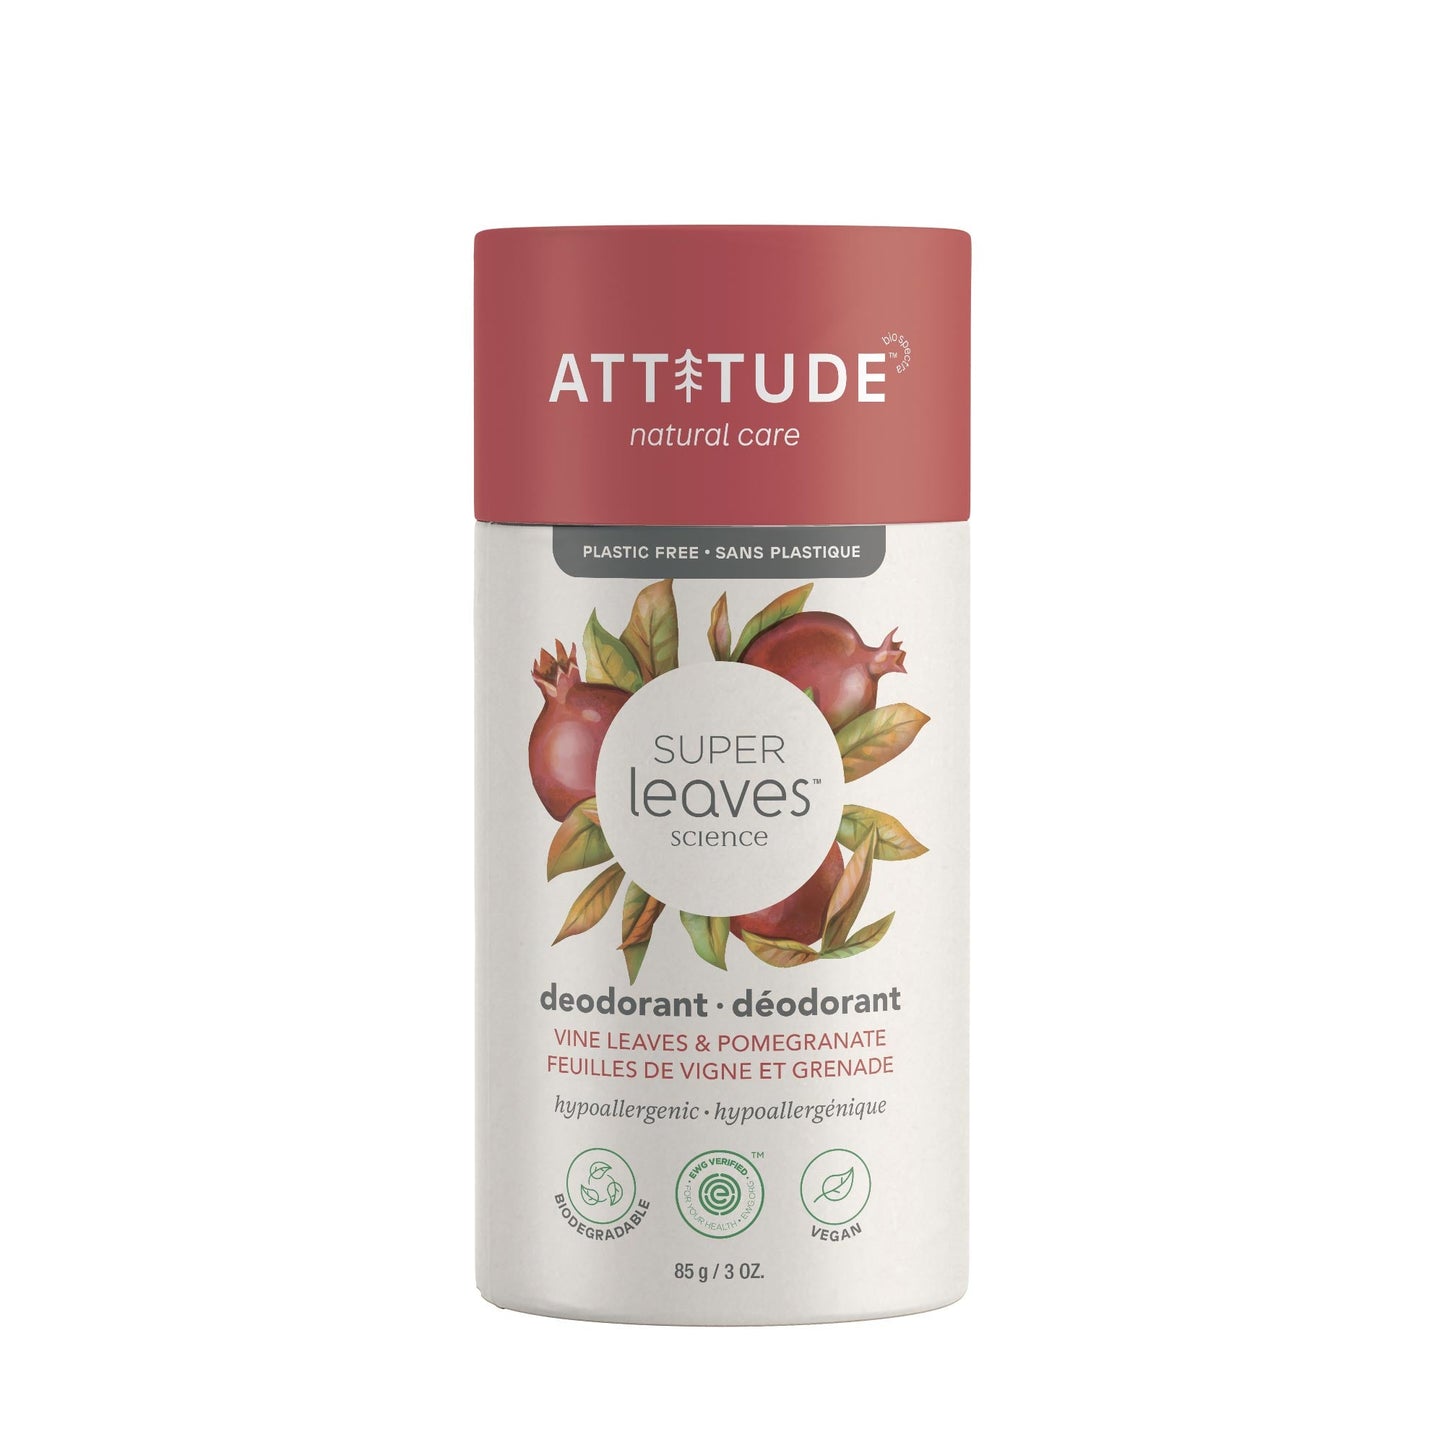 ATTITUDE Super leaves Biodegredable Deodorant Vine Leaves and pomegranate _en?